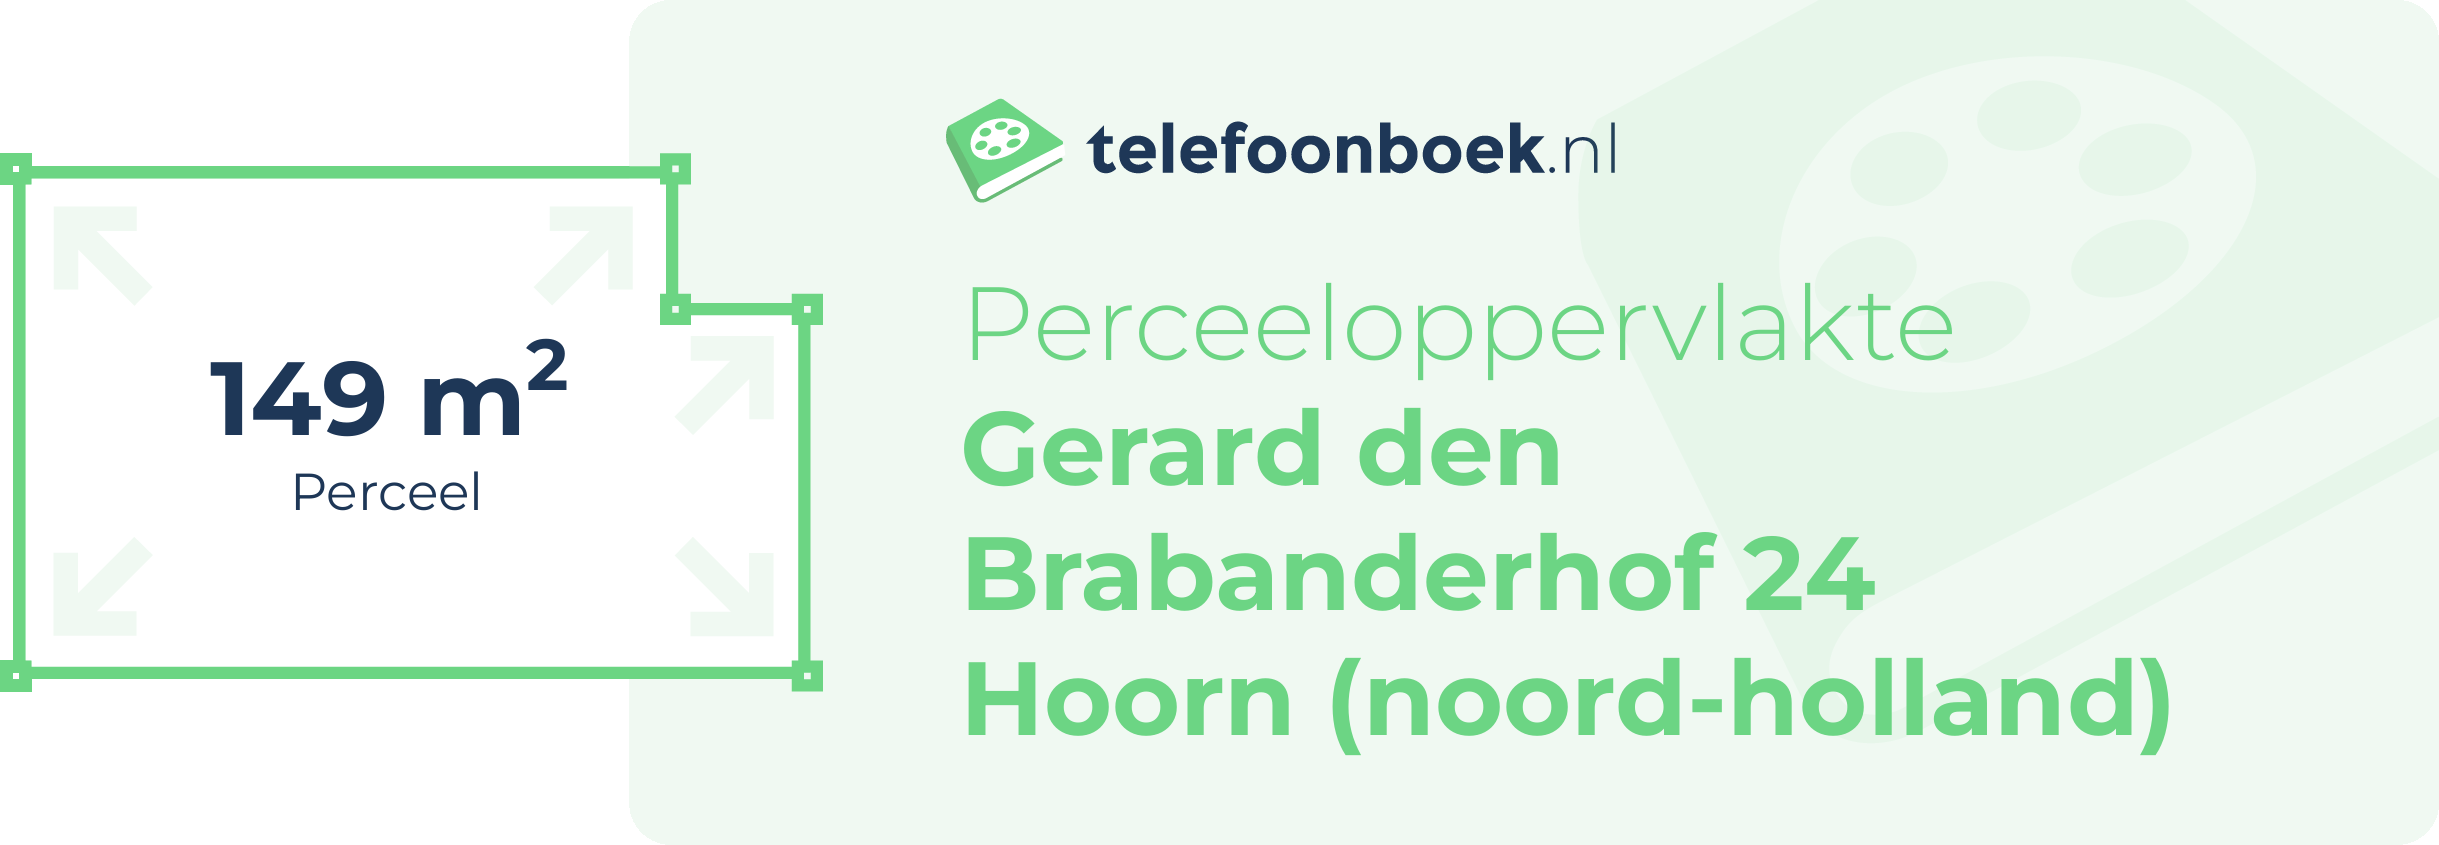 Perceeloppervlakte Gerard Den Brabanderhof 24 Hoorn (Noord-Holland)